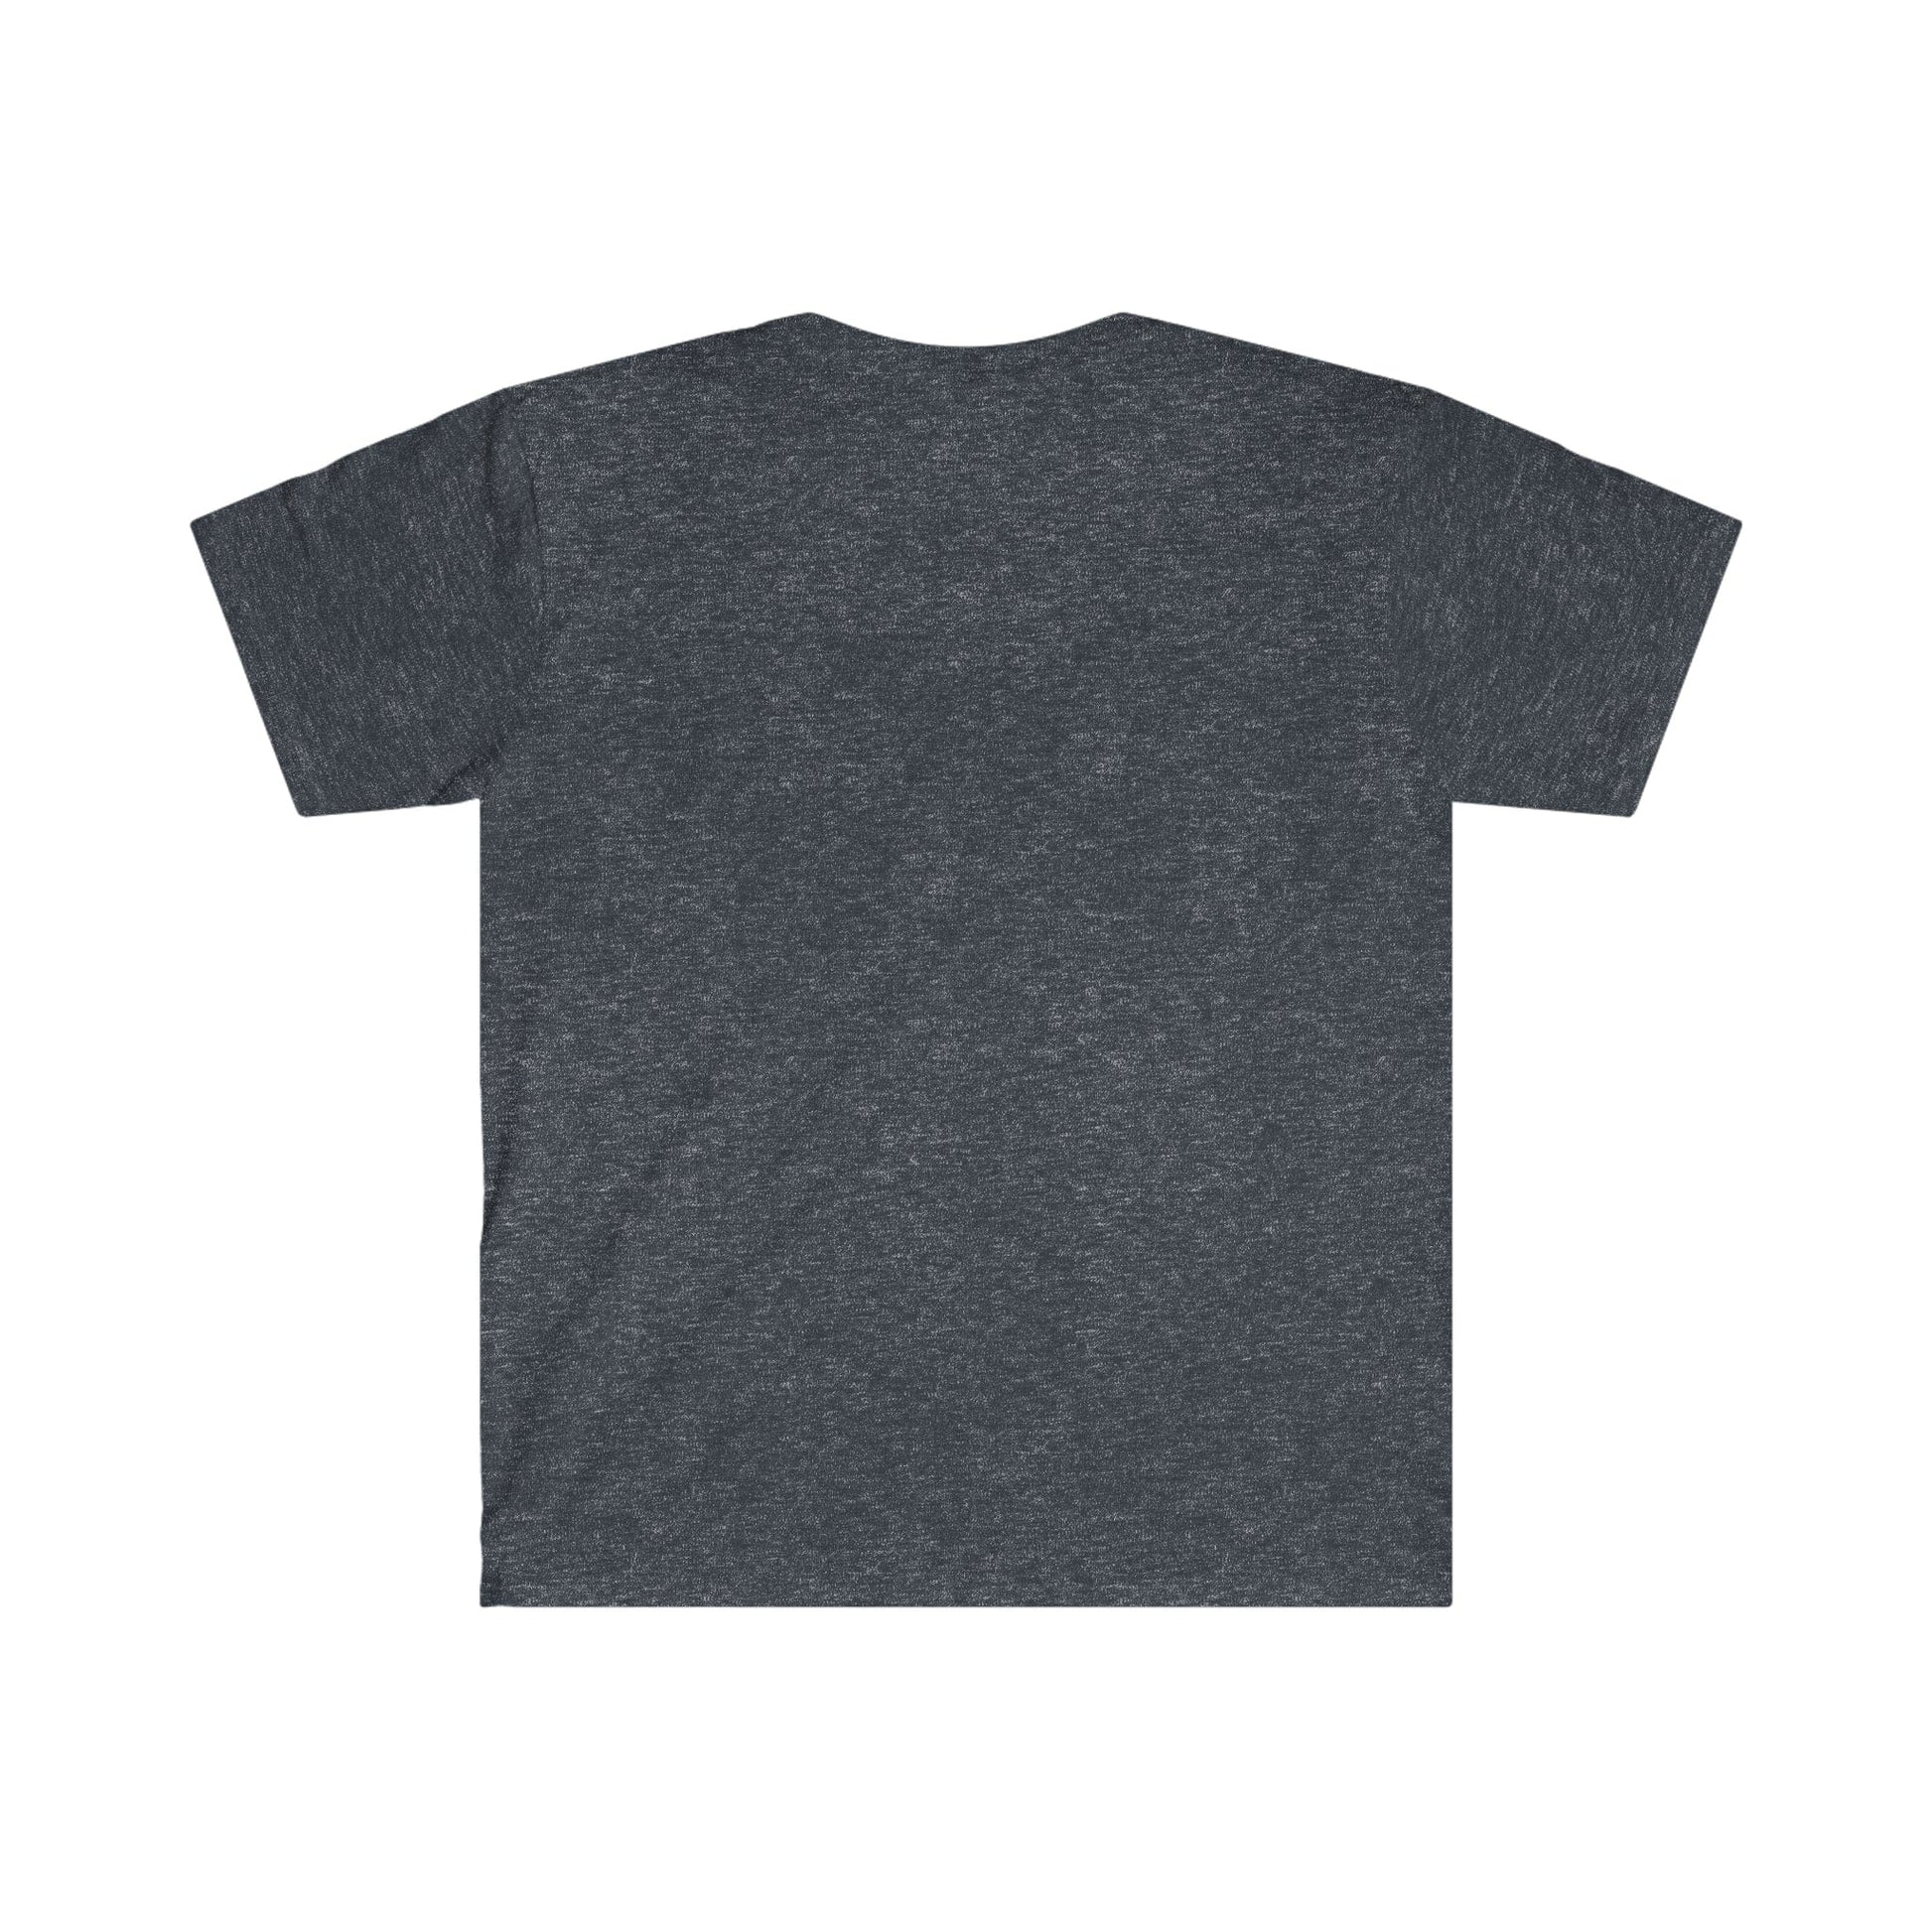 T-Shirt OZEMPIG Weight Loss Fad T-Shirt LEATHERDADDY BATOR